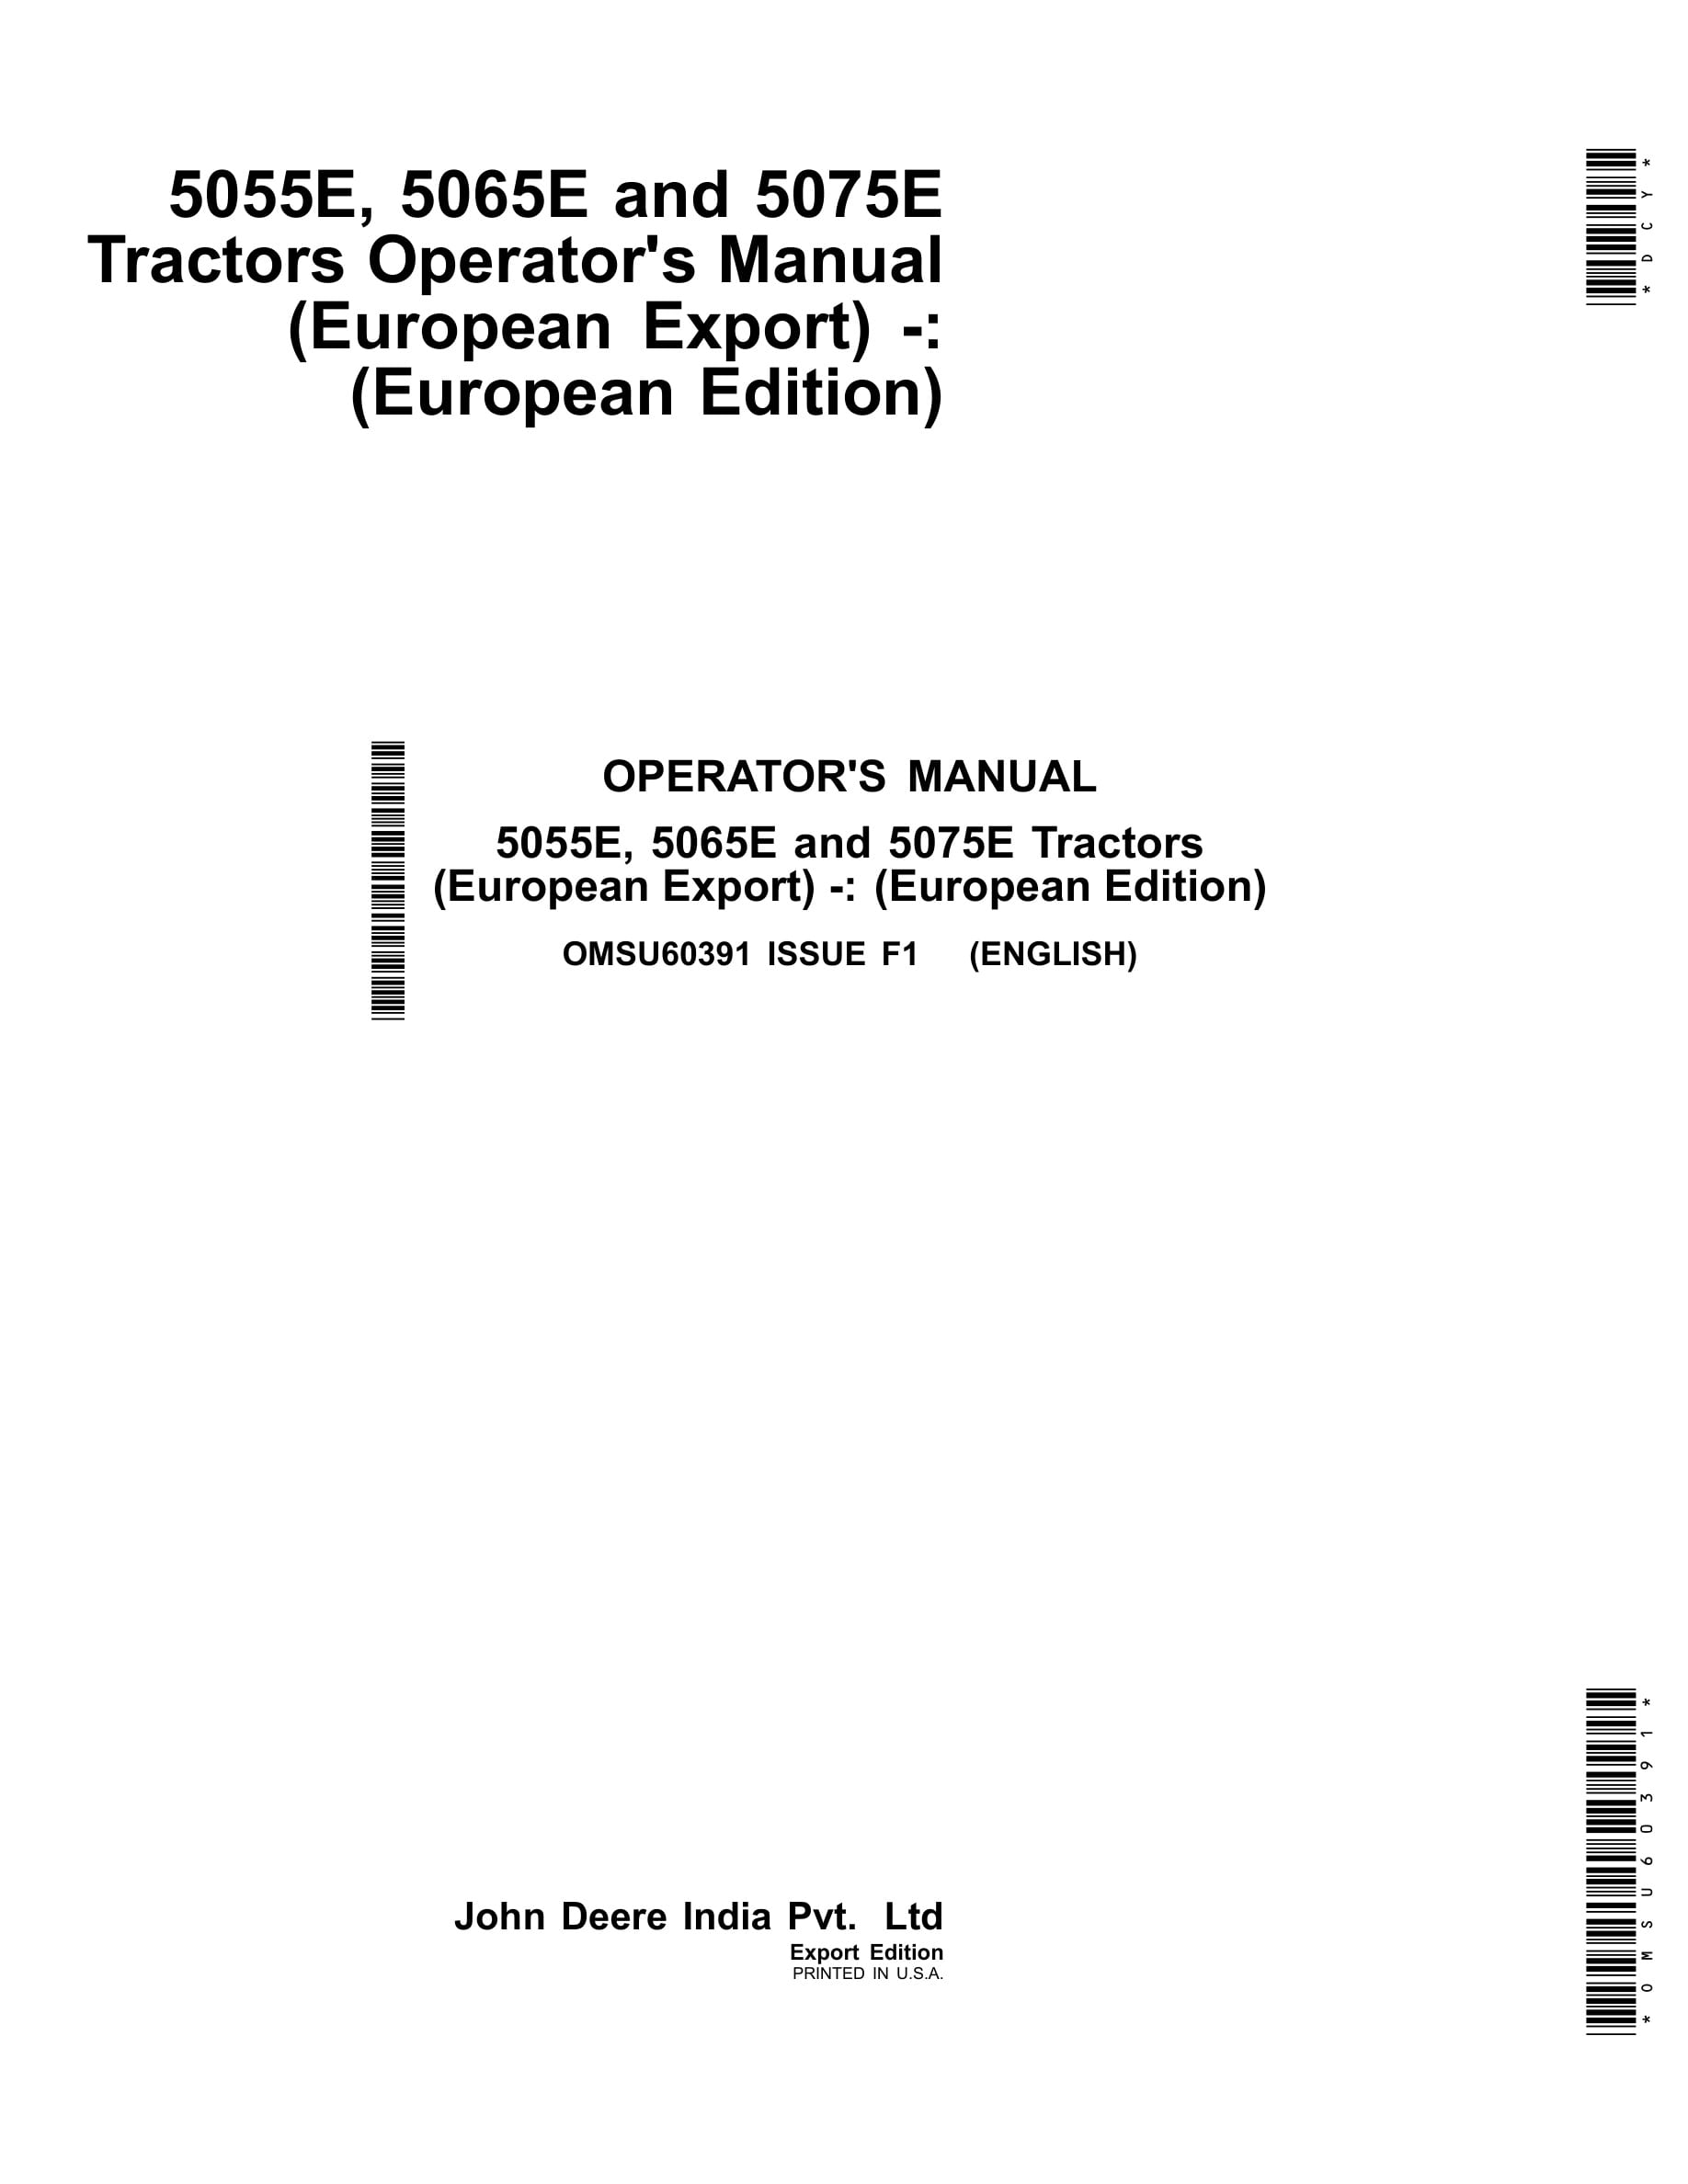 John Deere 5055e, 5065e And 5075e Tractors Operator Manuals OMSU60391-1